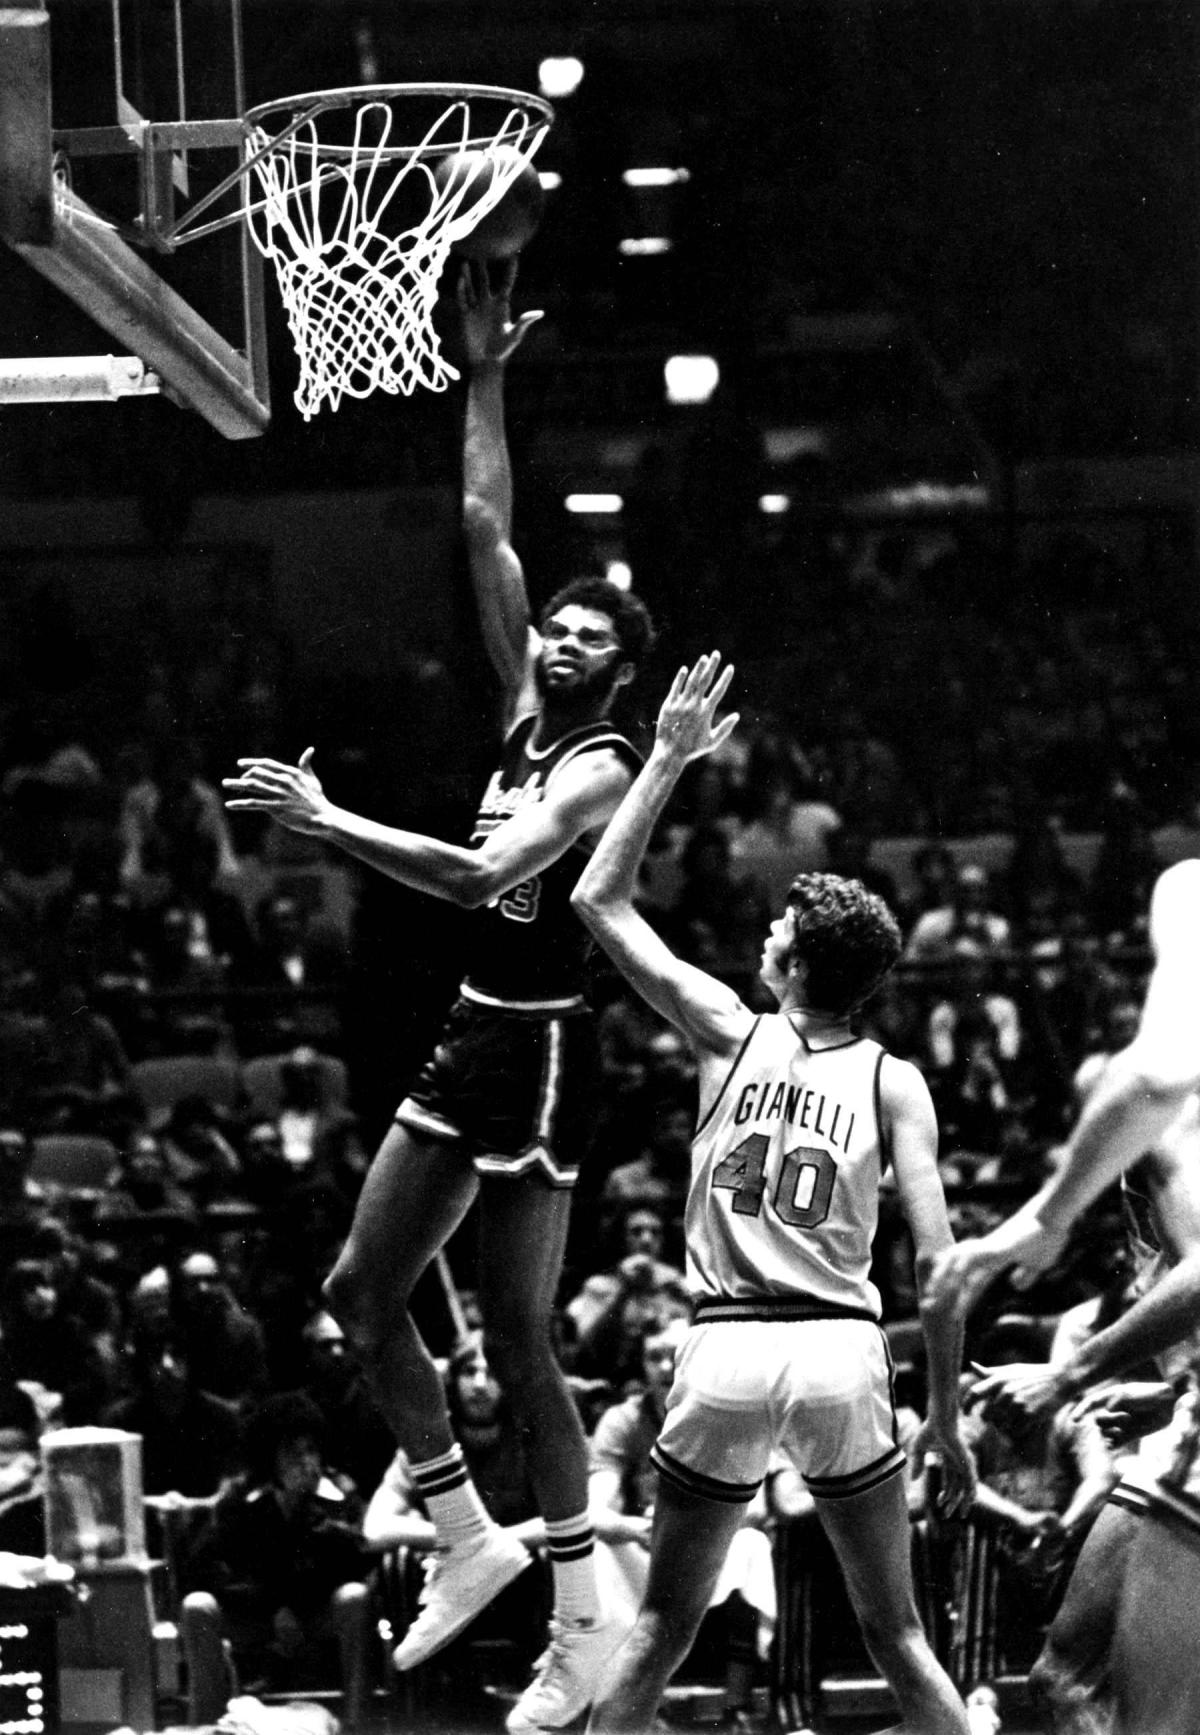 Kareem Abdul-Jabbar dunking a basketball